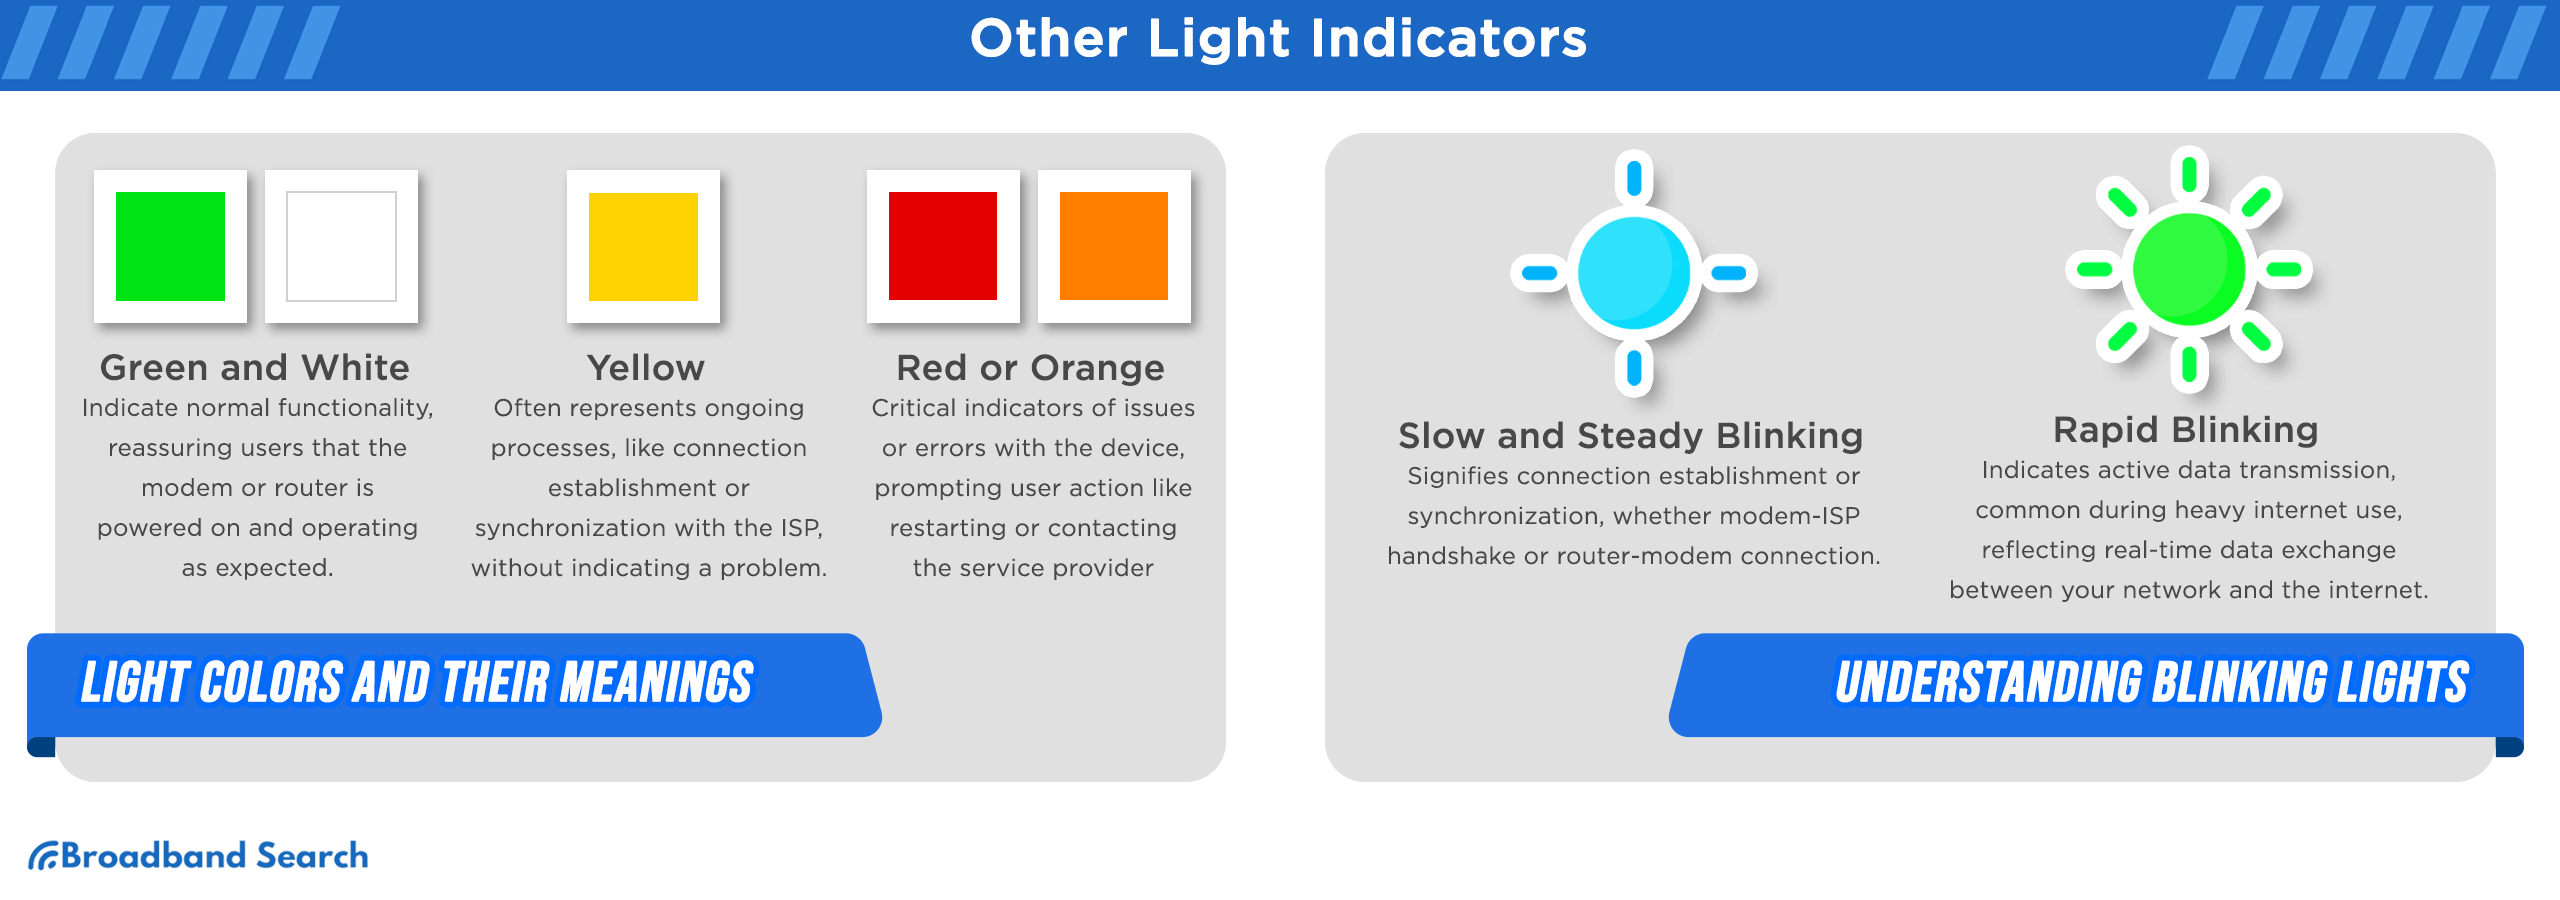 Other light indicators